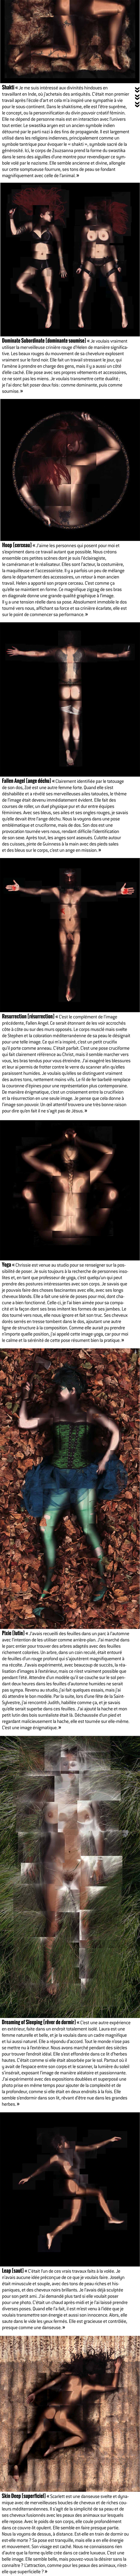 Tous Les Jours Curieux magazine - France- featuring Jamie McCartney's scanner photography